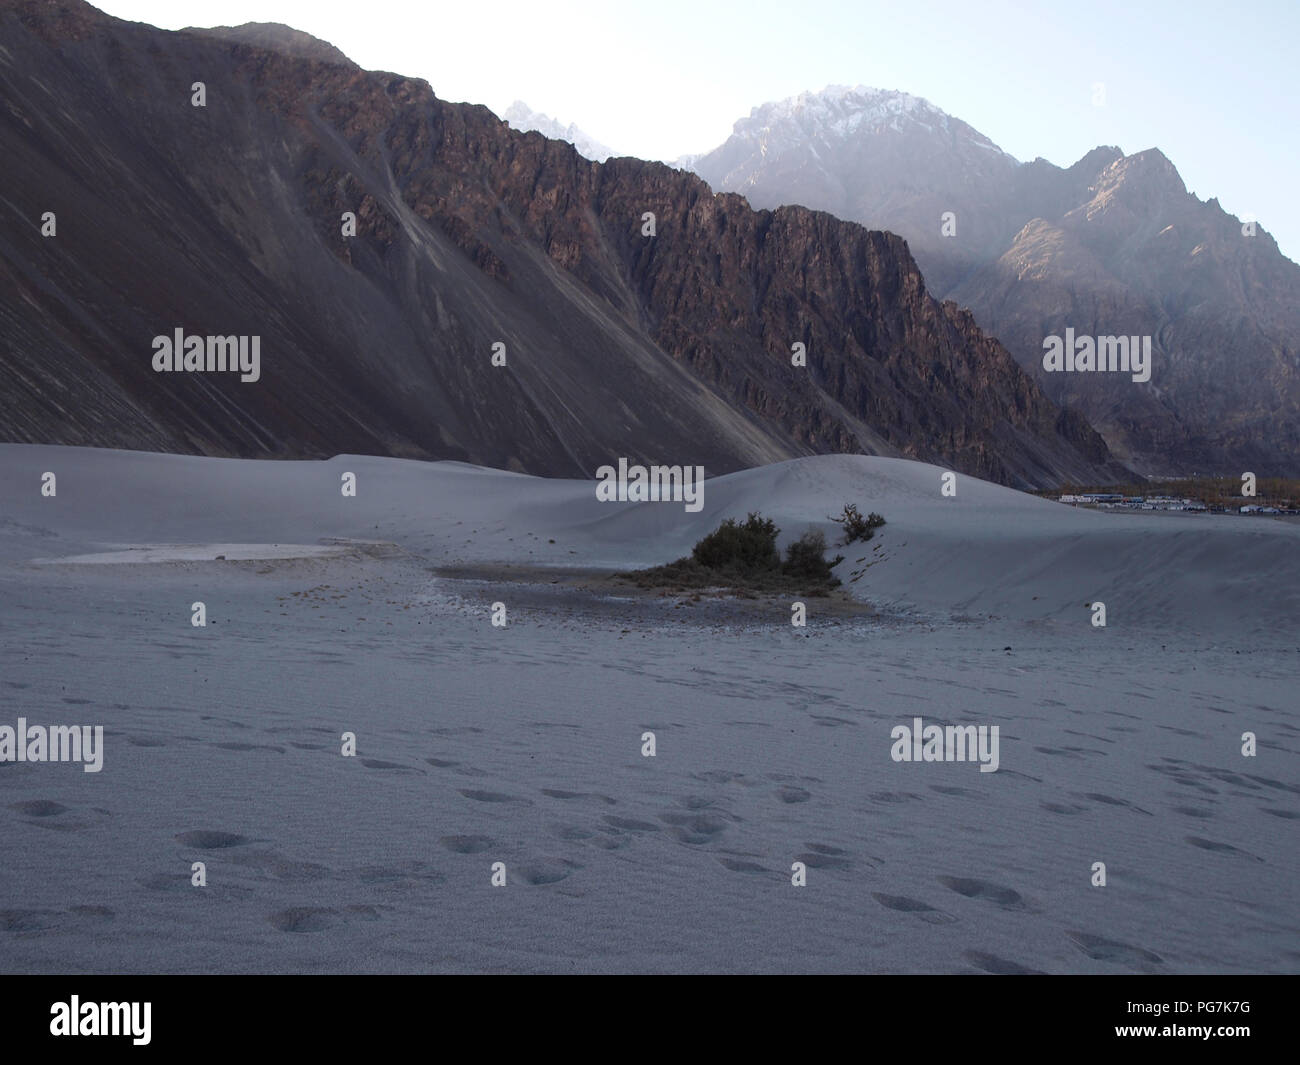 Sand dunes at the floor of Nubra valley, Ladakh, between the Himalayas and the Karakoram ranges Stock Photo